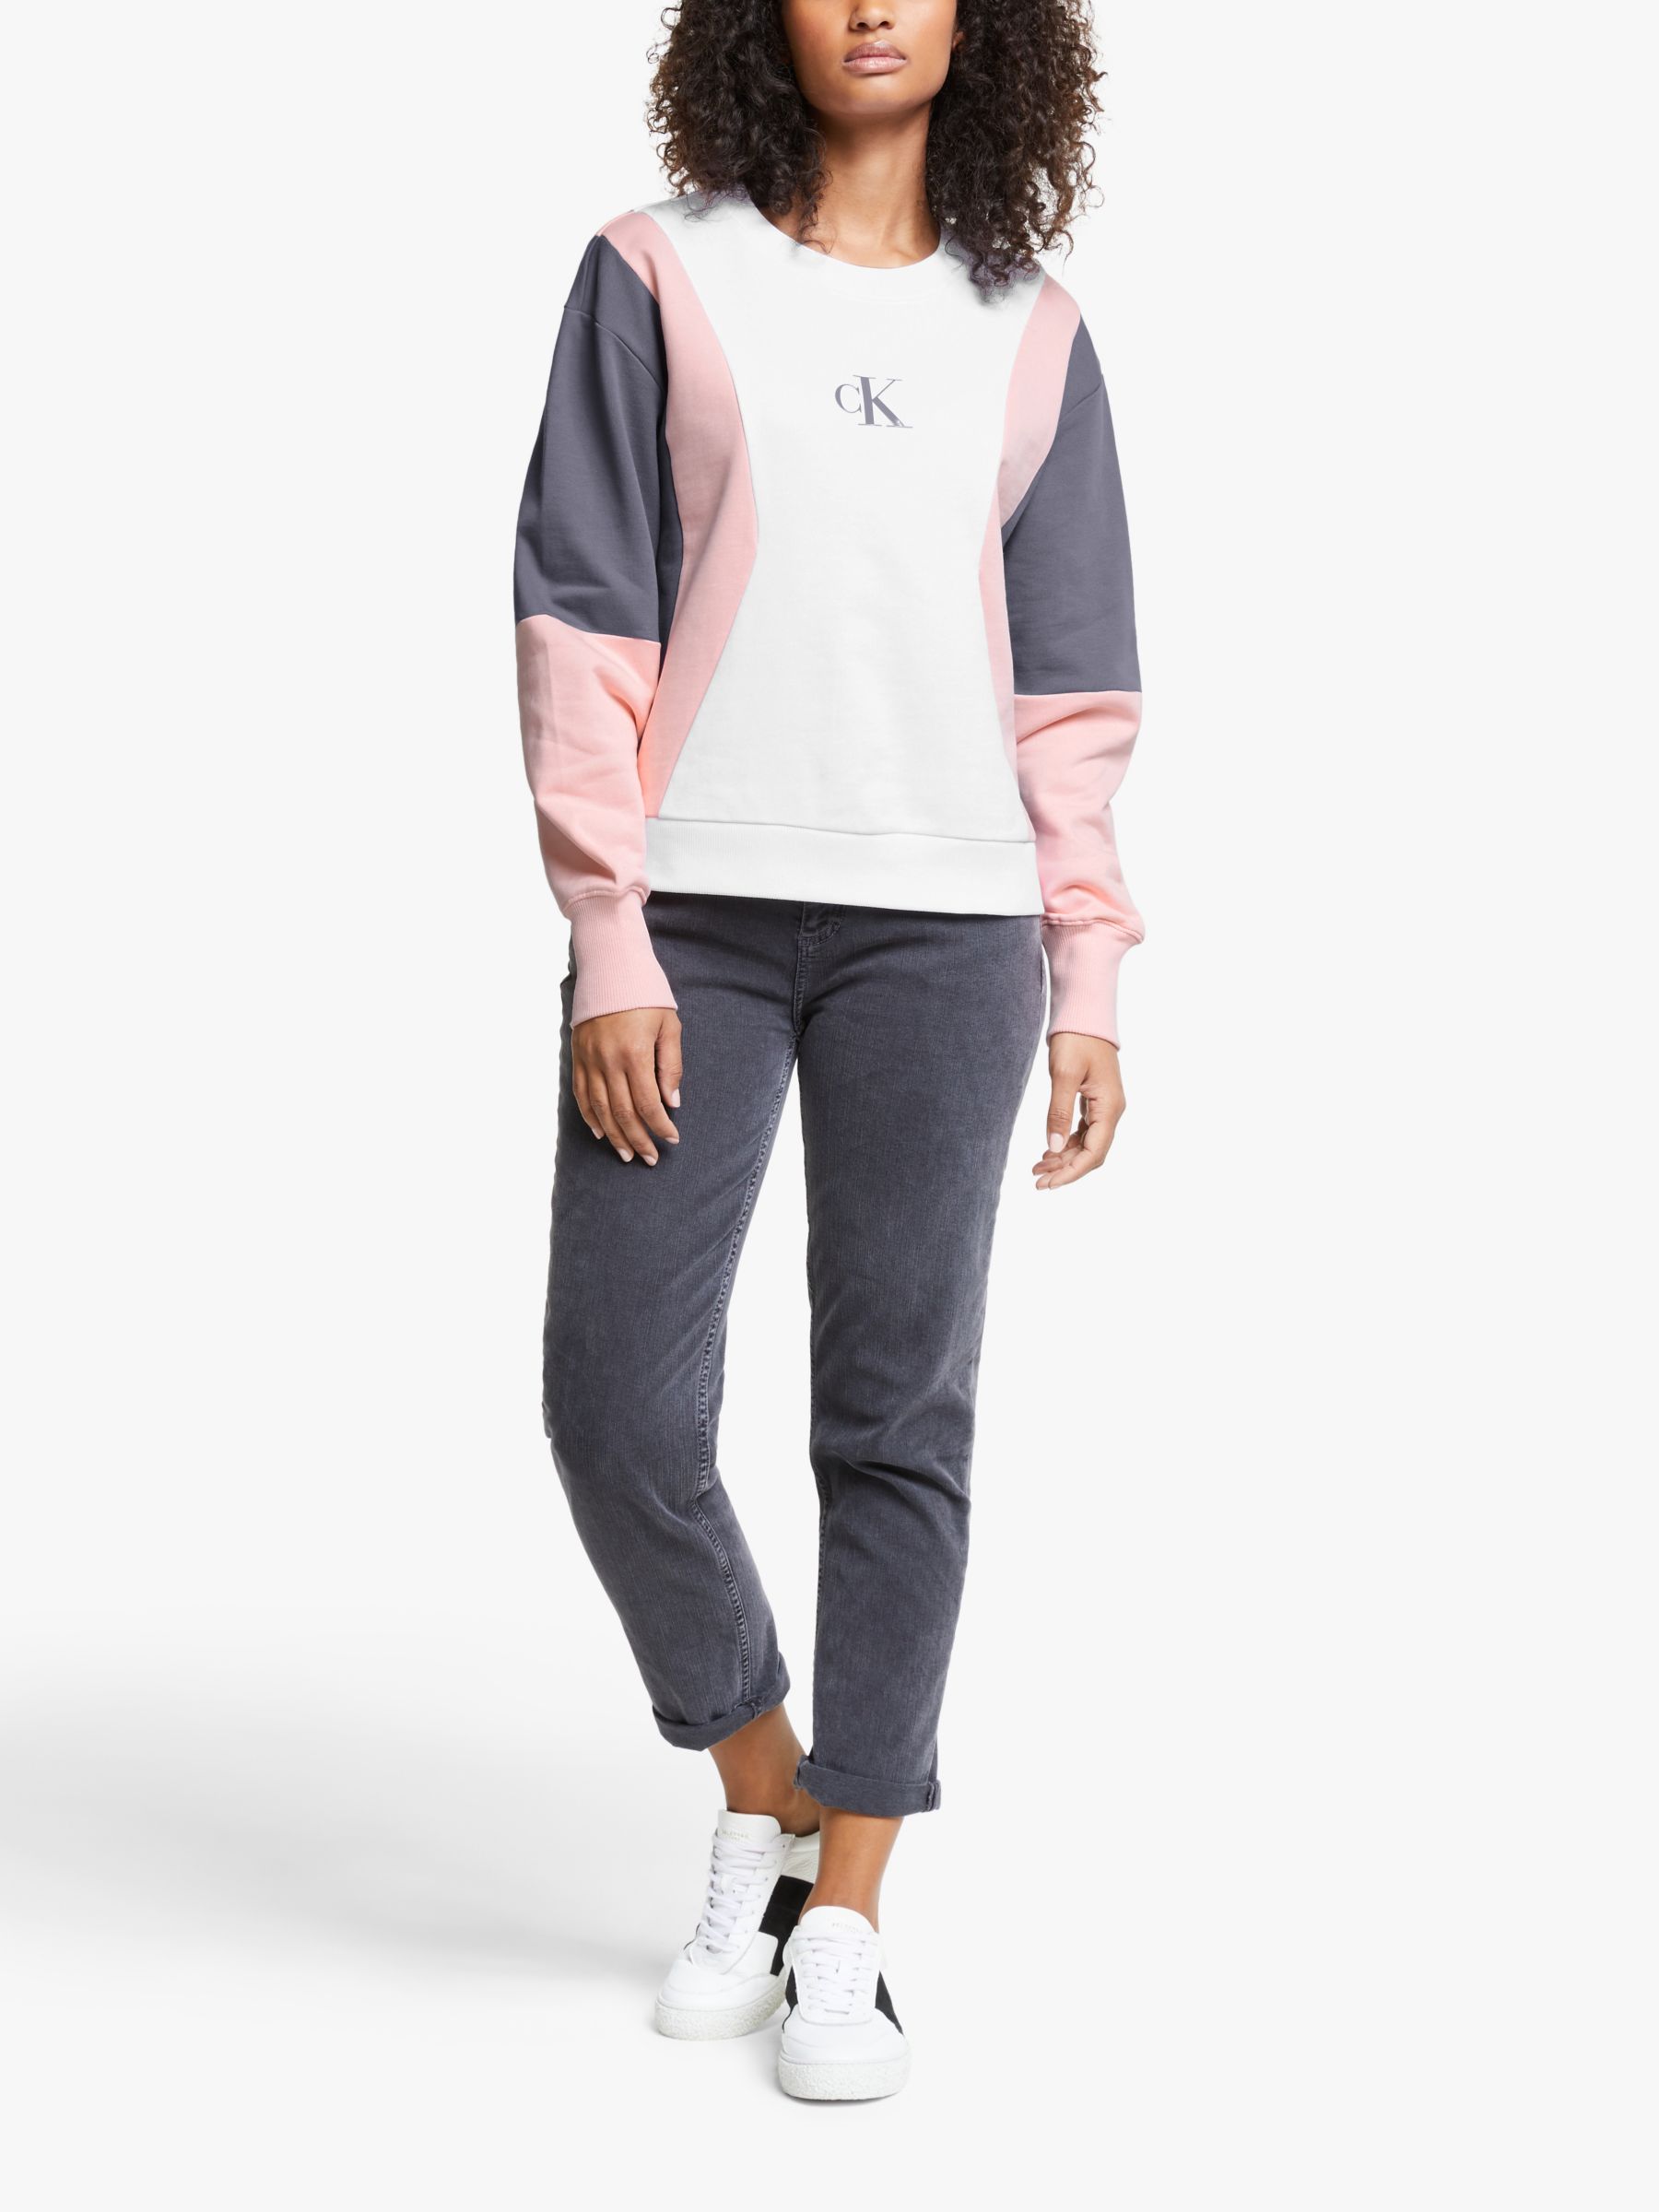 Calvin Klein Computer & Office Athletic Sweatshirts for Women